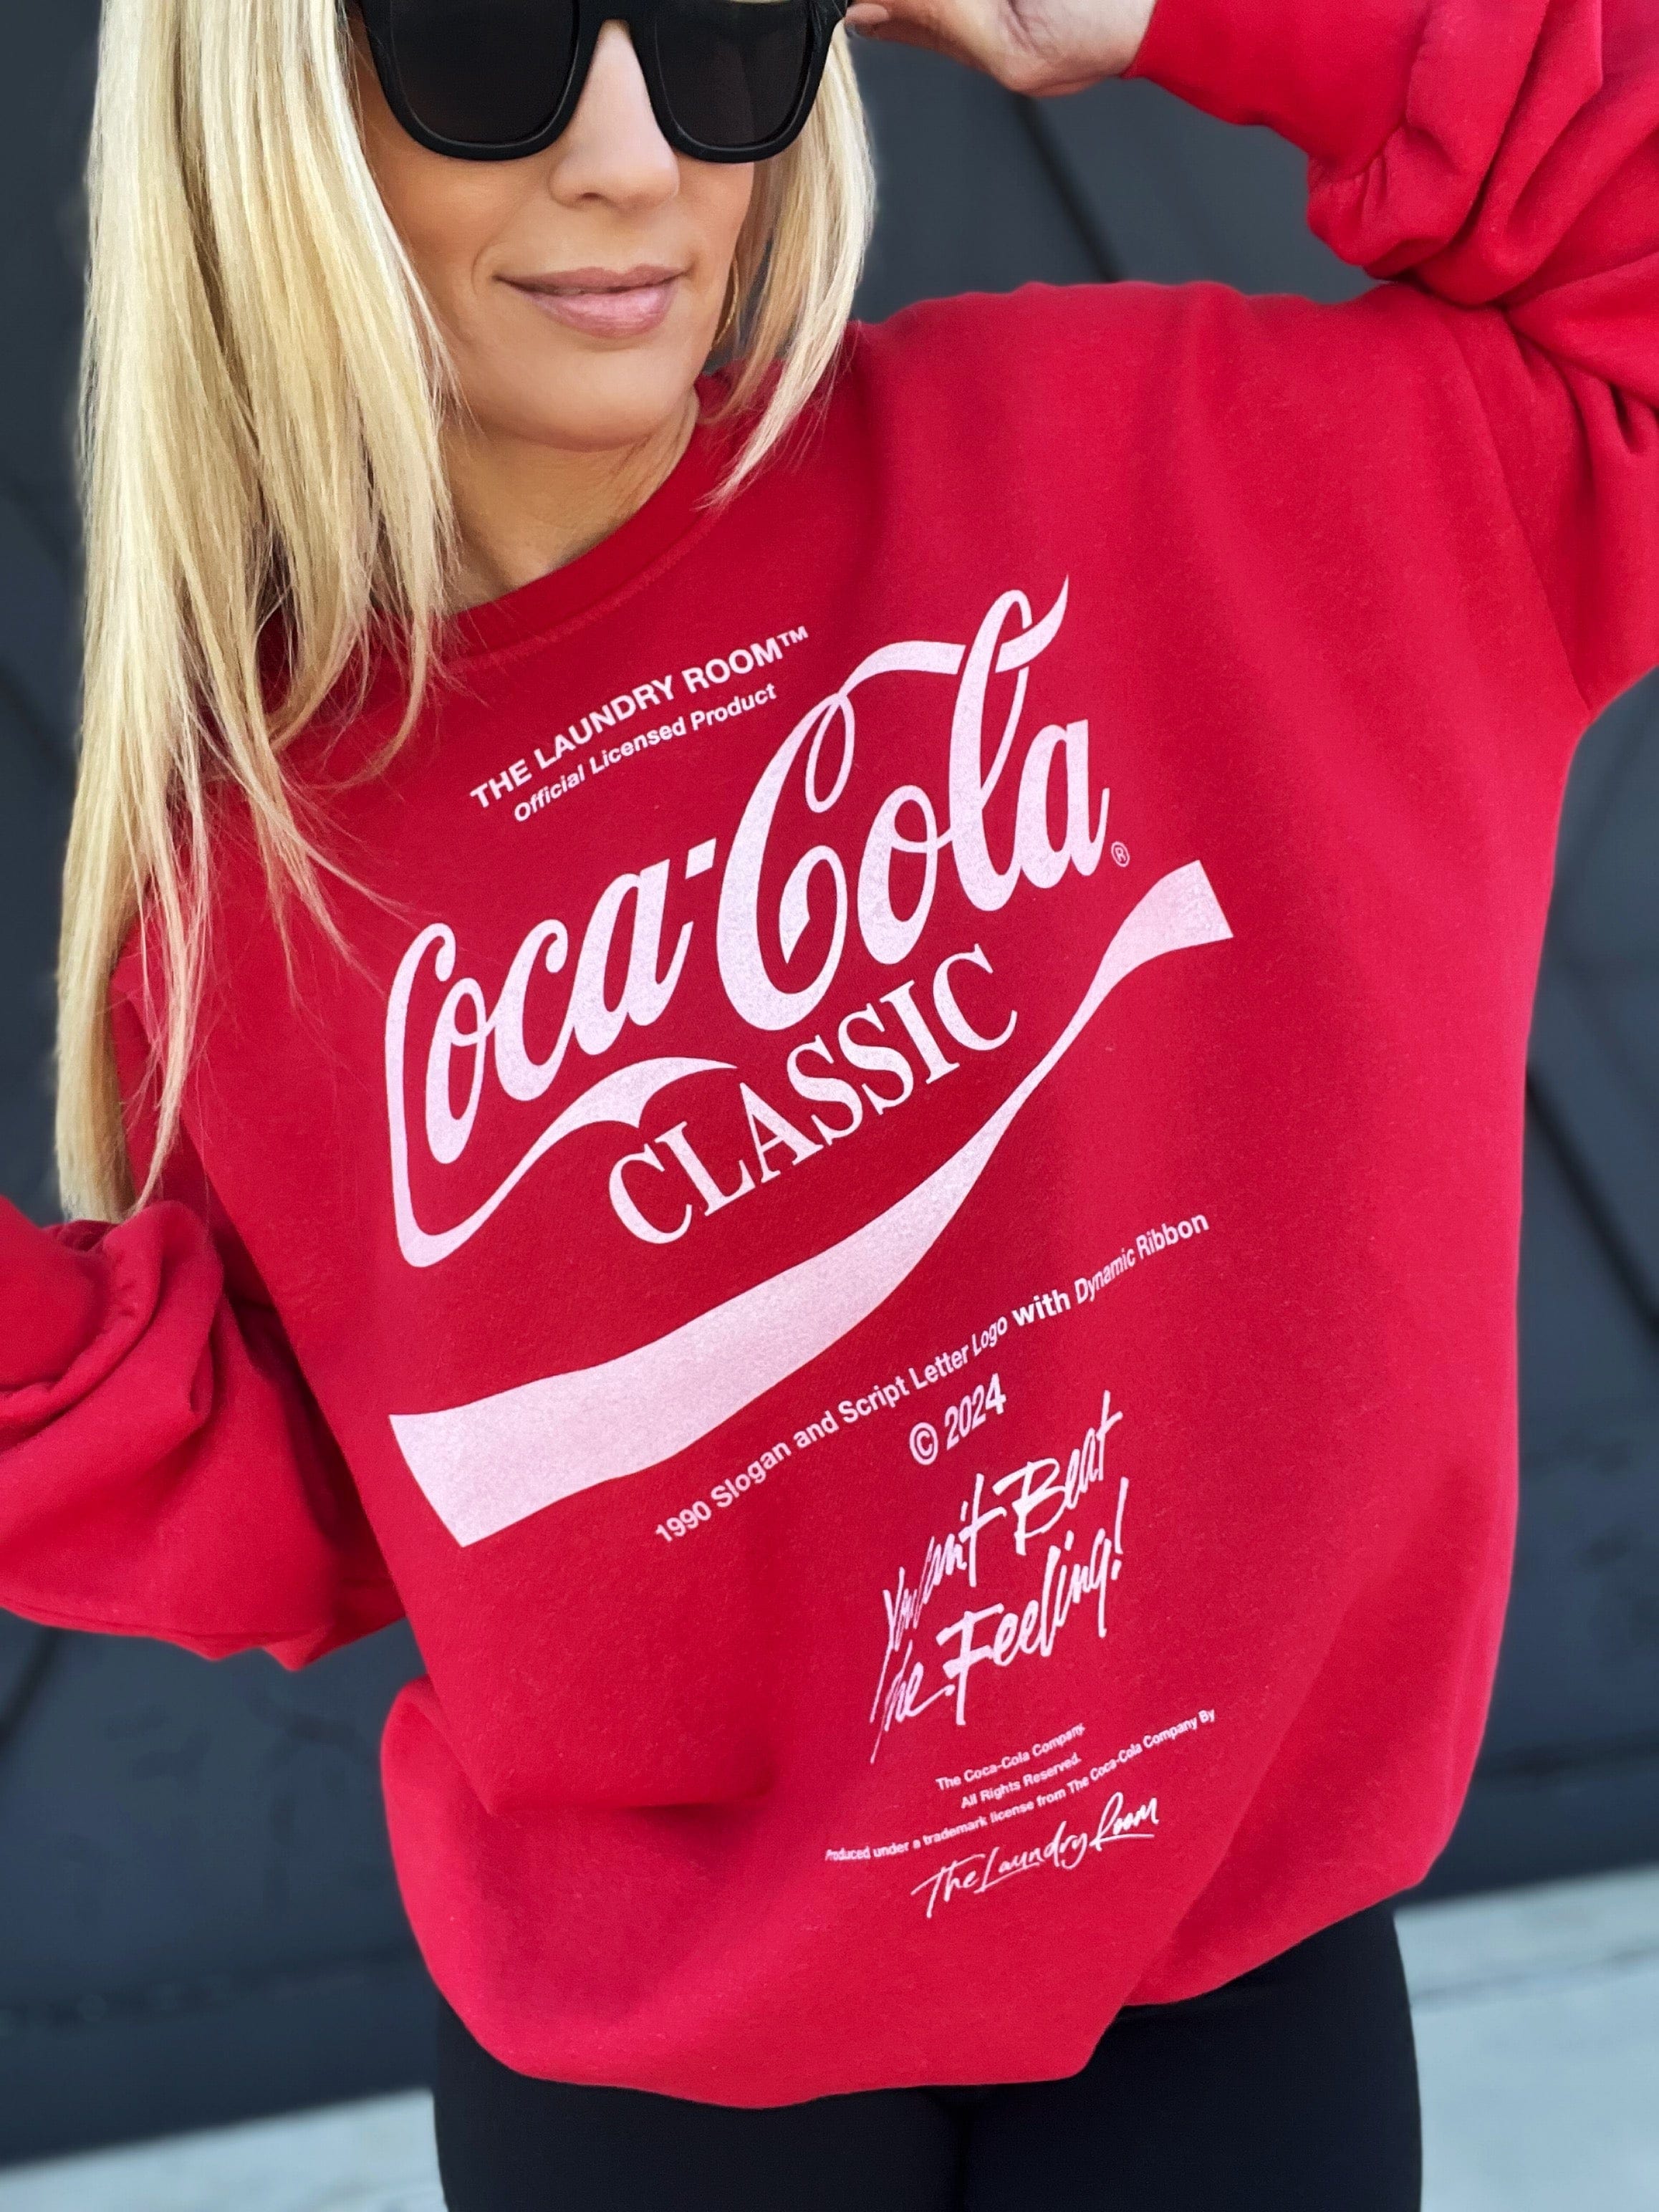 Official Licensed Coca Cola Sweatshirt In Red - Infinity Raine